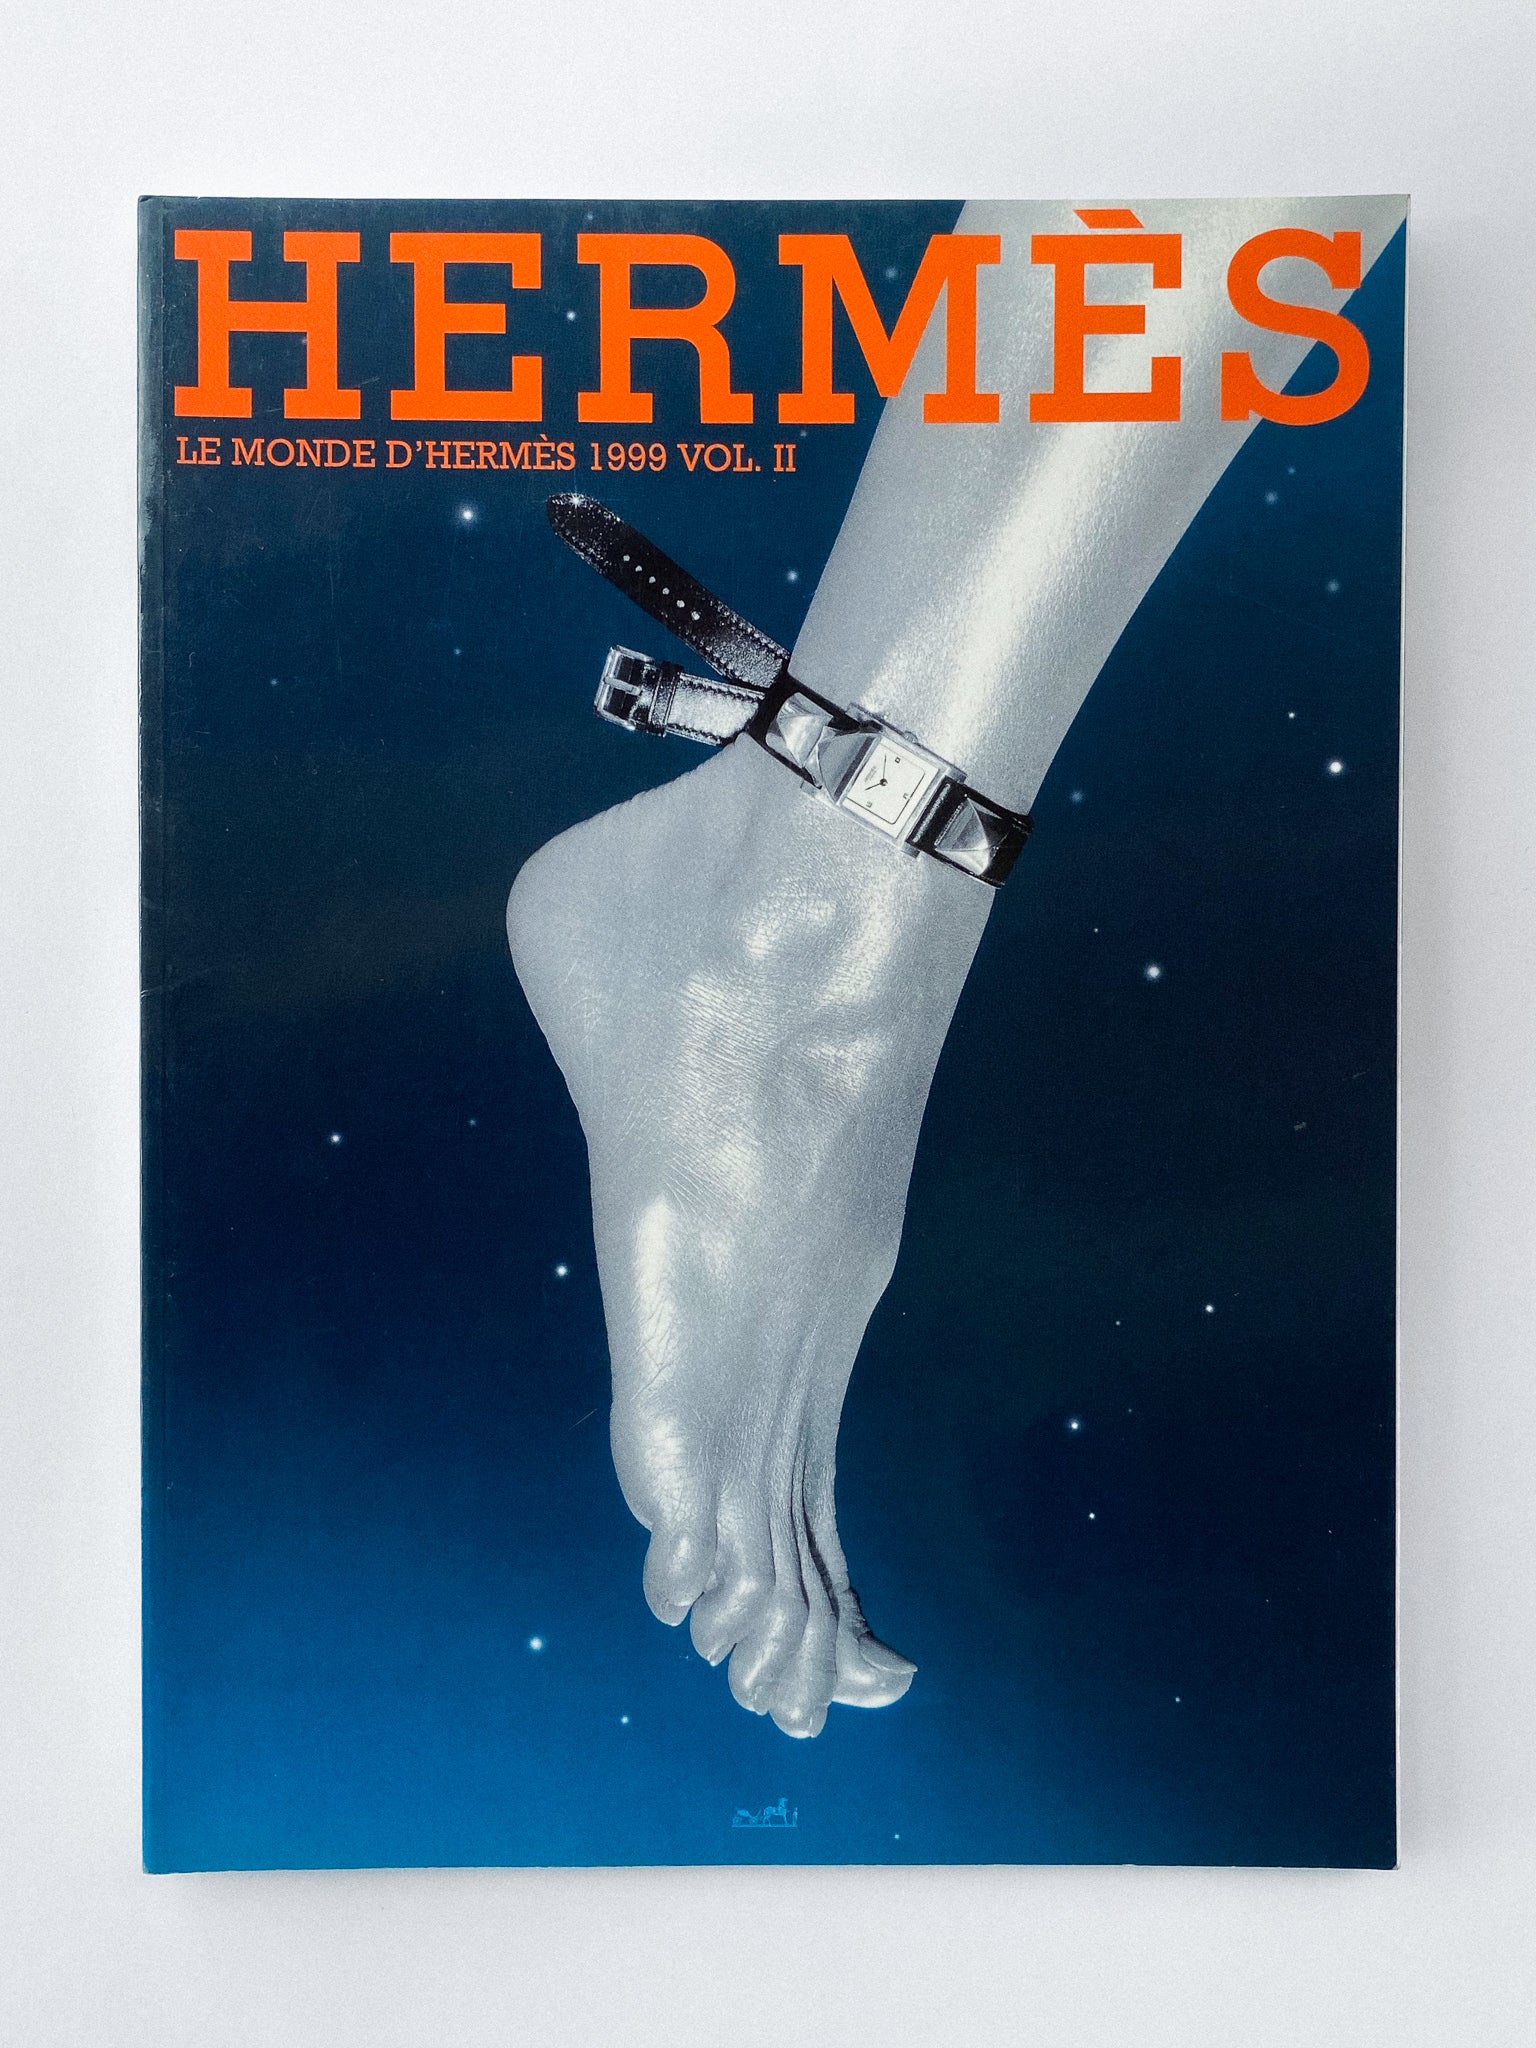 Le Monde d'Hermès N° 35, 1999 Vol. II